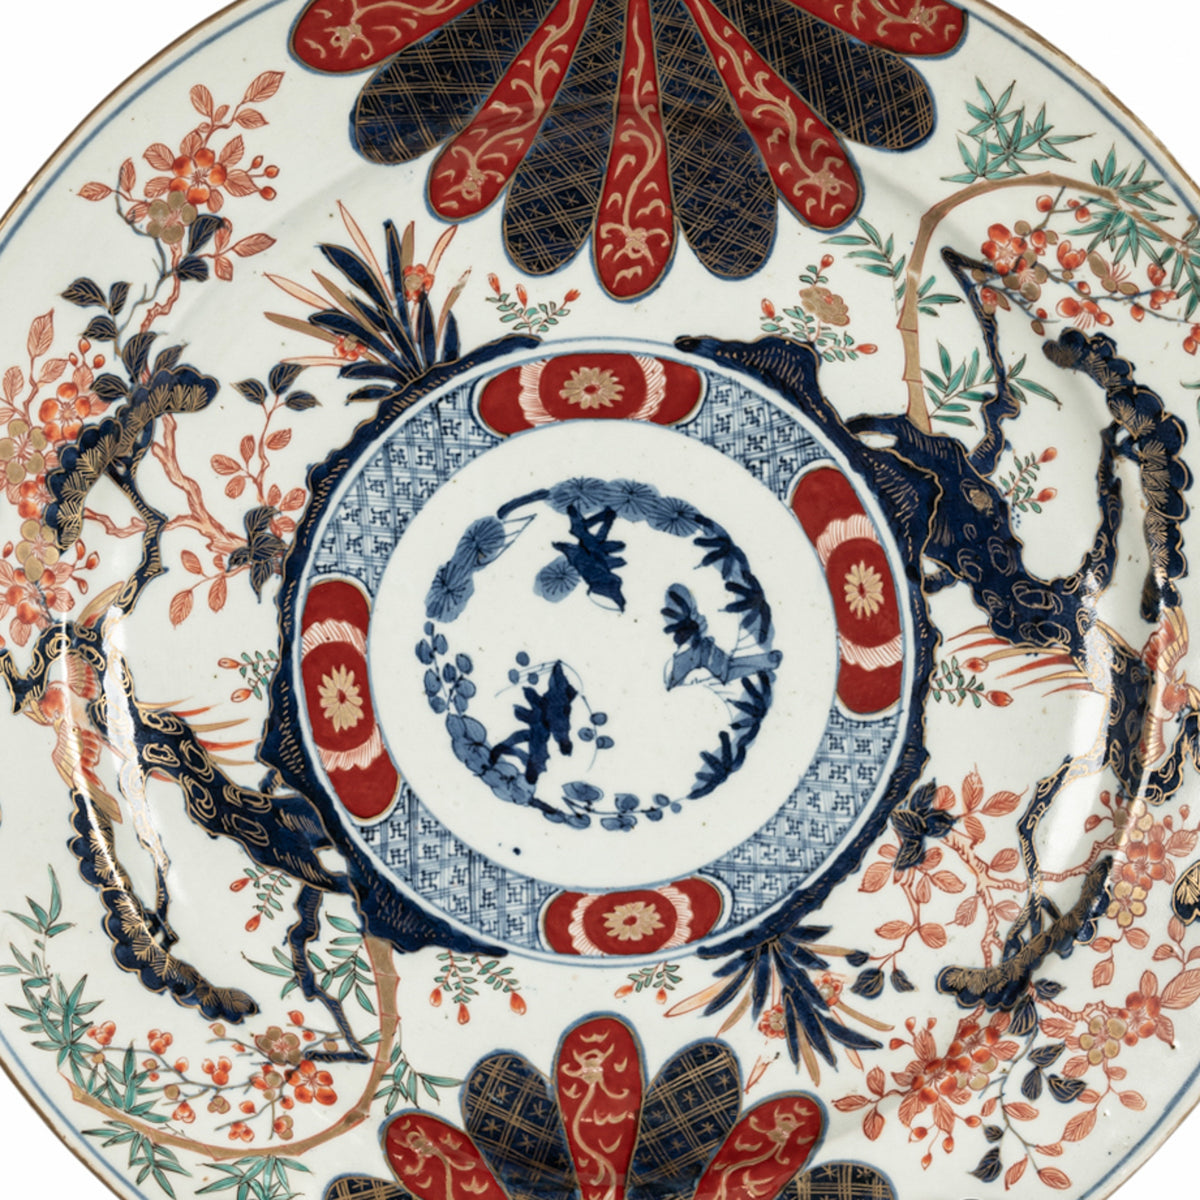 Monumental Antique Japanese Meiji Period Imari Porcelain Charger Plate 1880